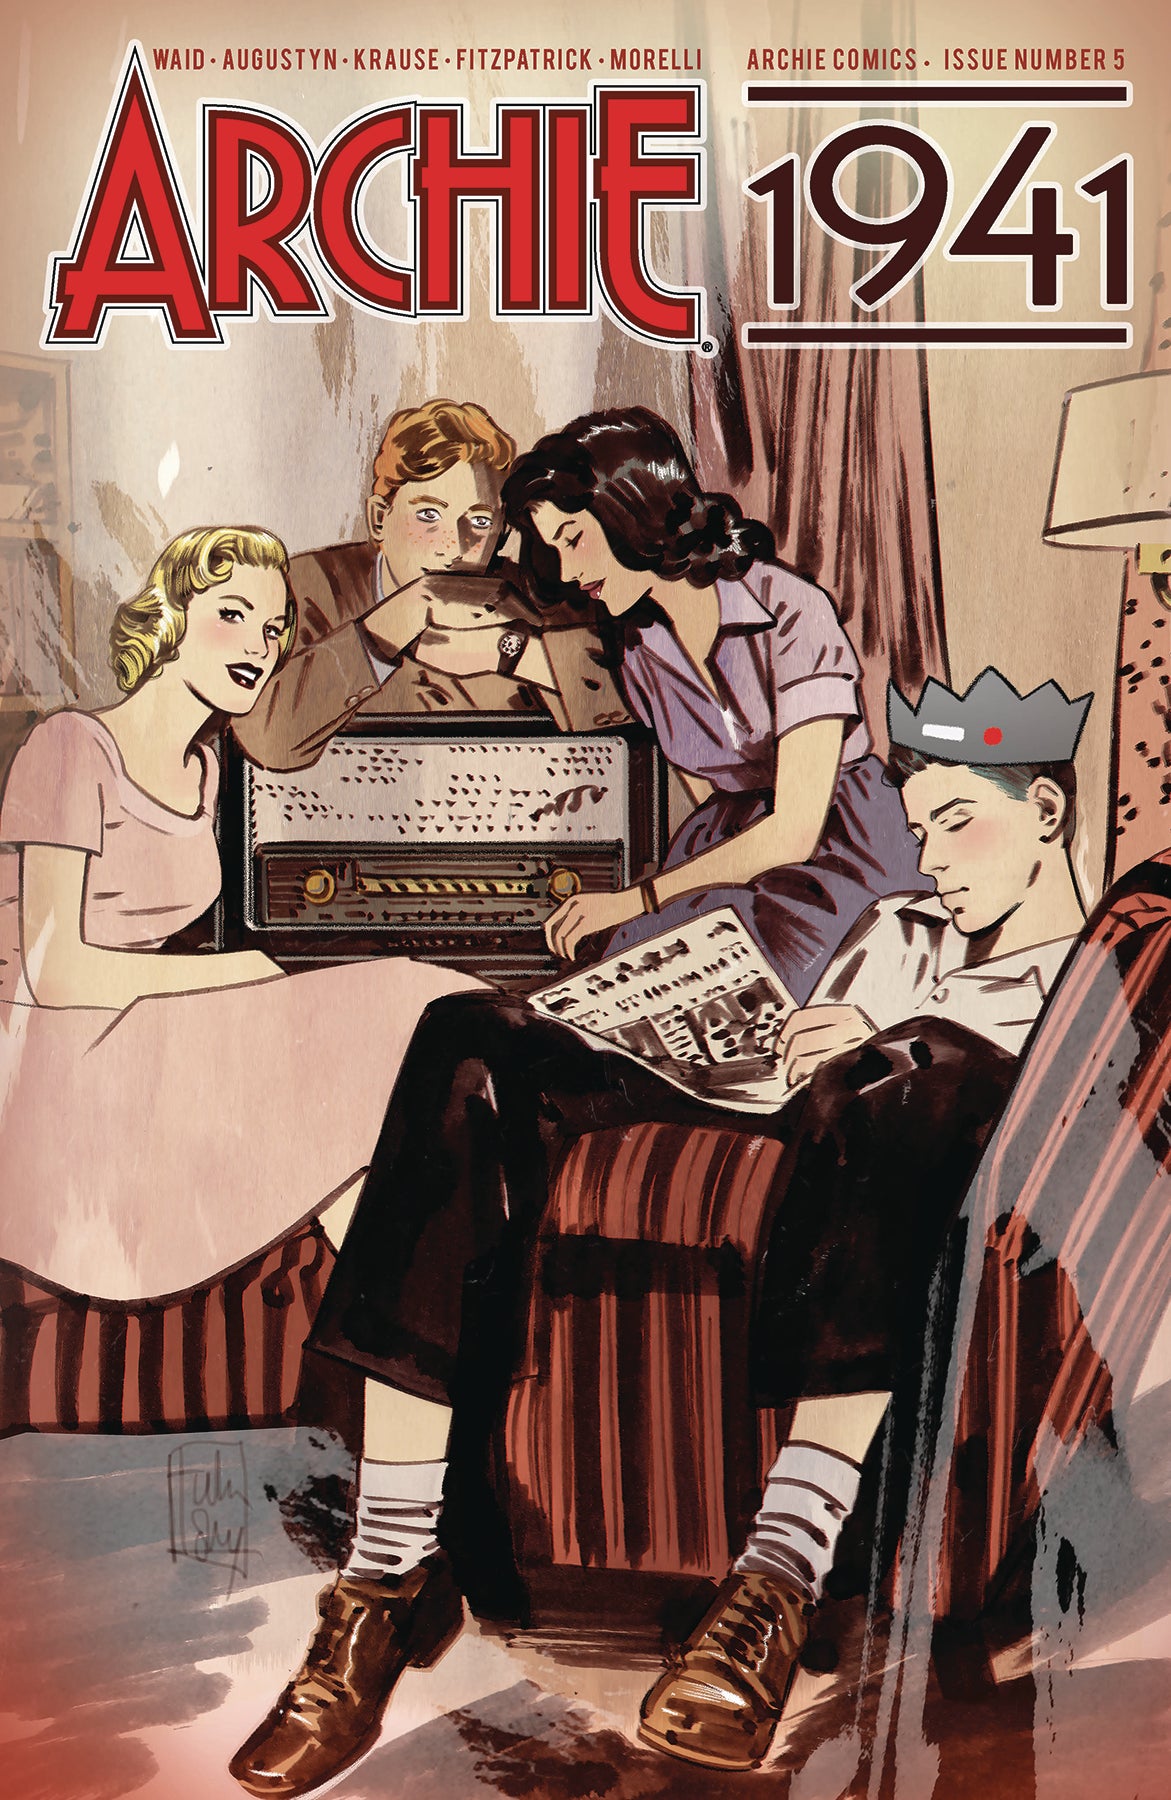 ARCHIE 1941 #5 (OF 5) CVR C ORDWAY | L.A. Mood Comics and Games